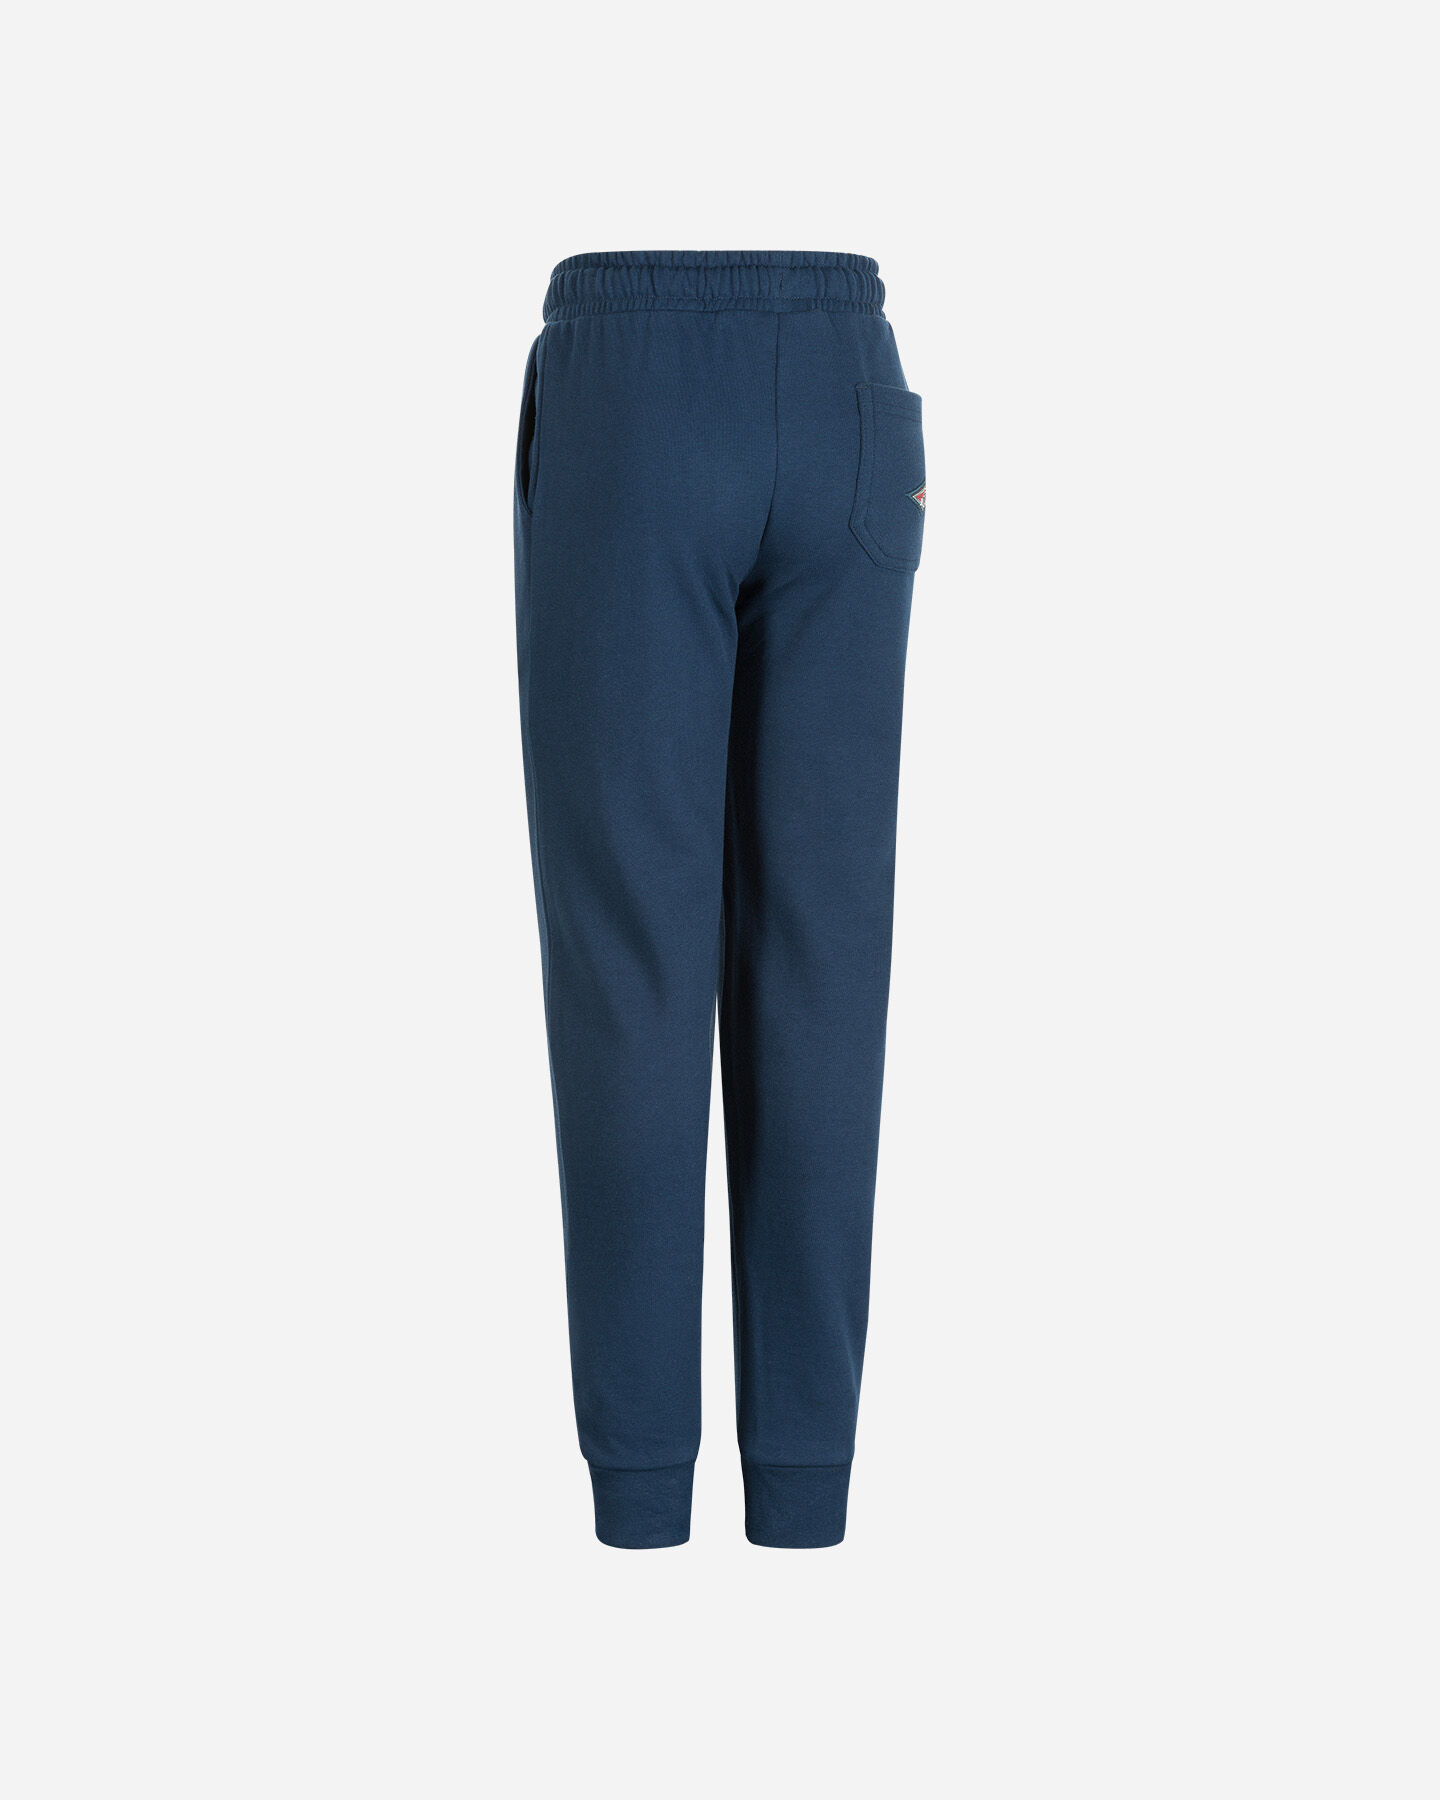  Pantalone BEAR CLASSIC JR S4081852|519A|6 scatto 1